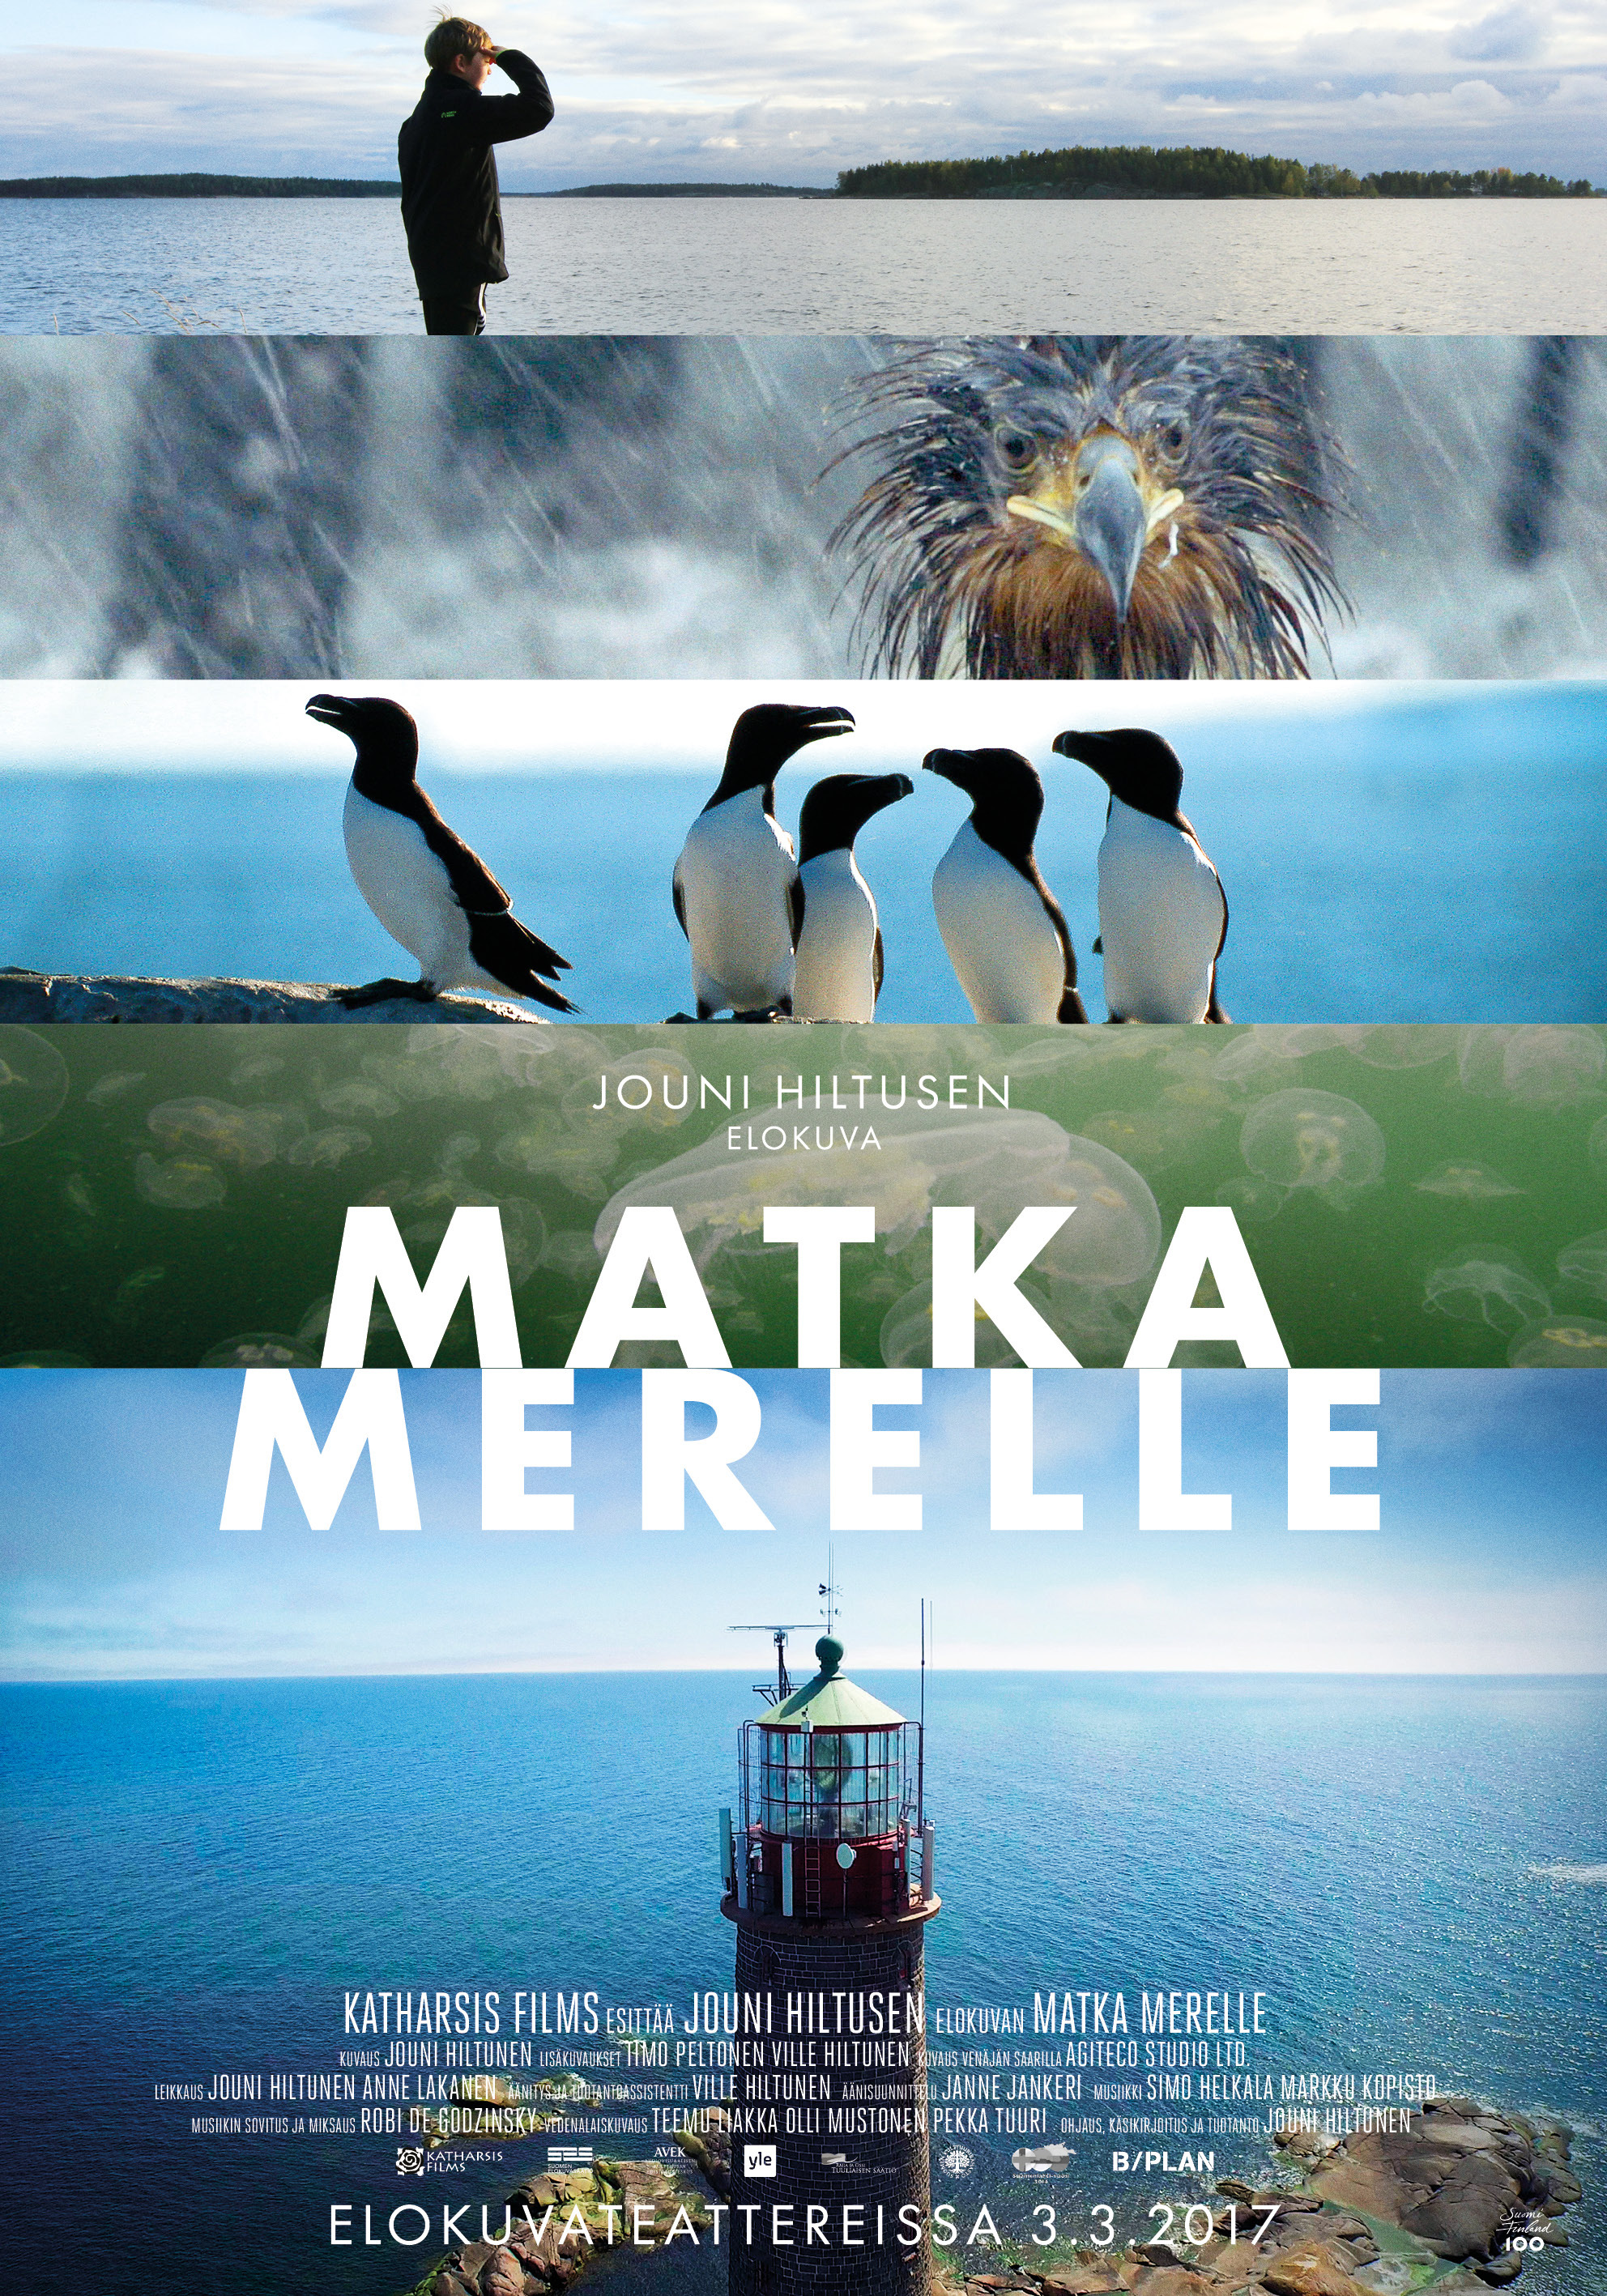 Mega Sized Movie Poster Image for Matka merelle 